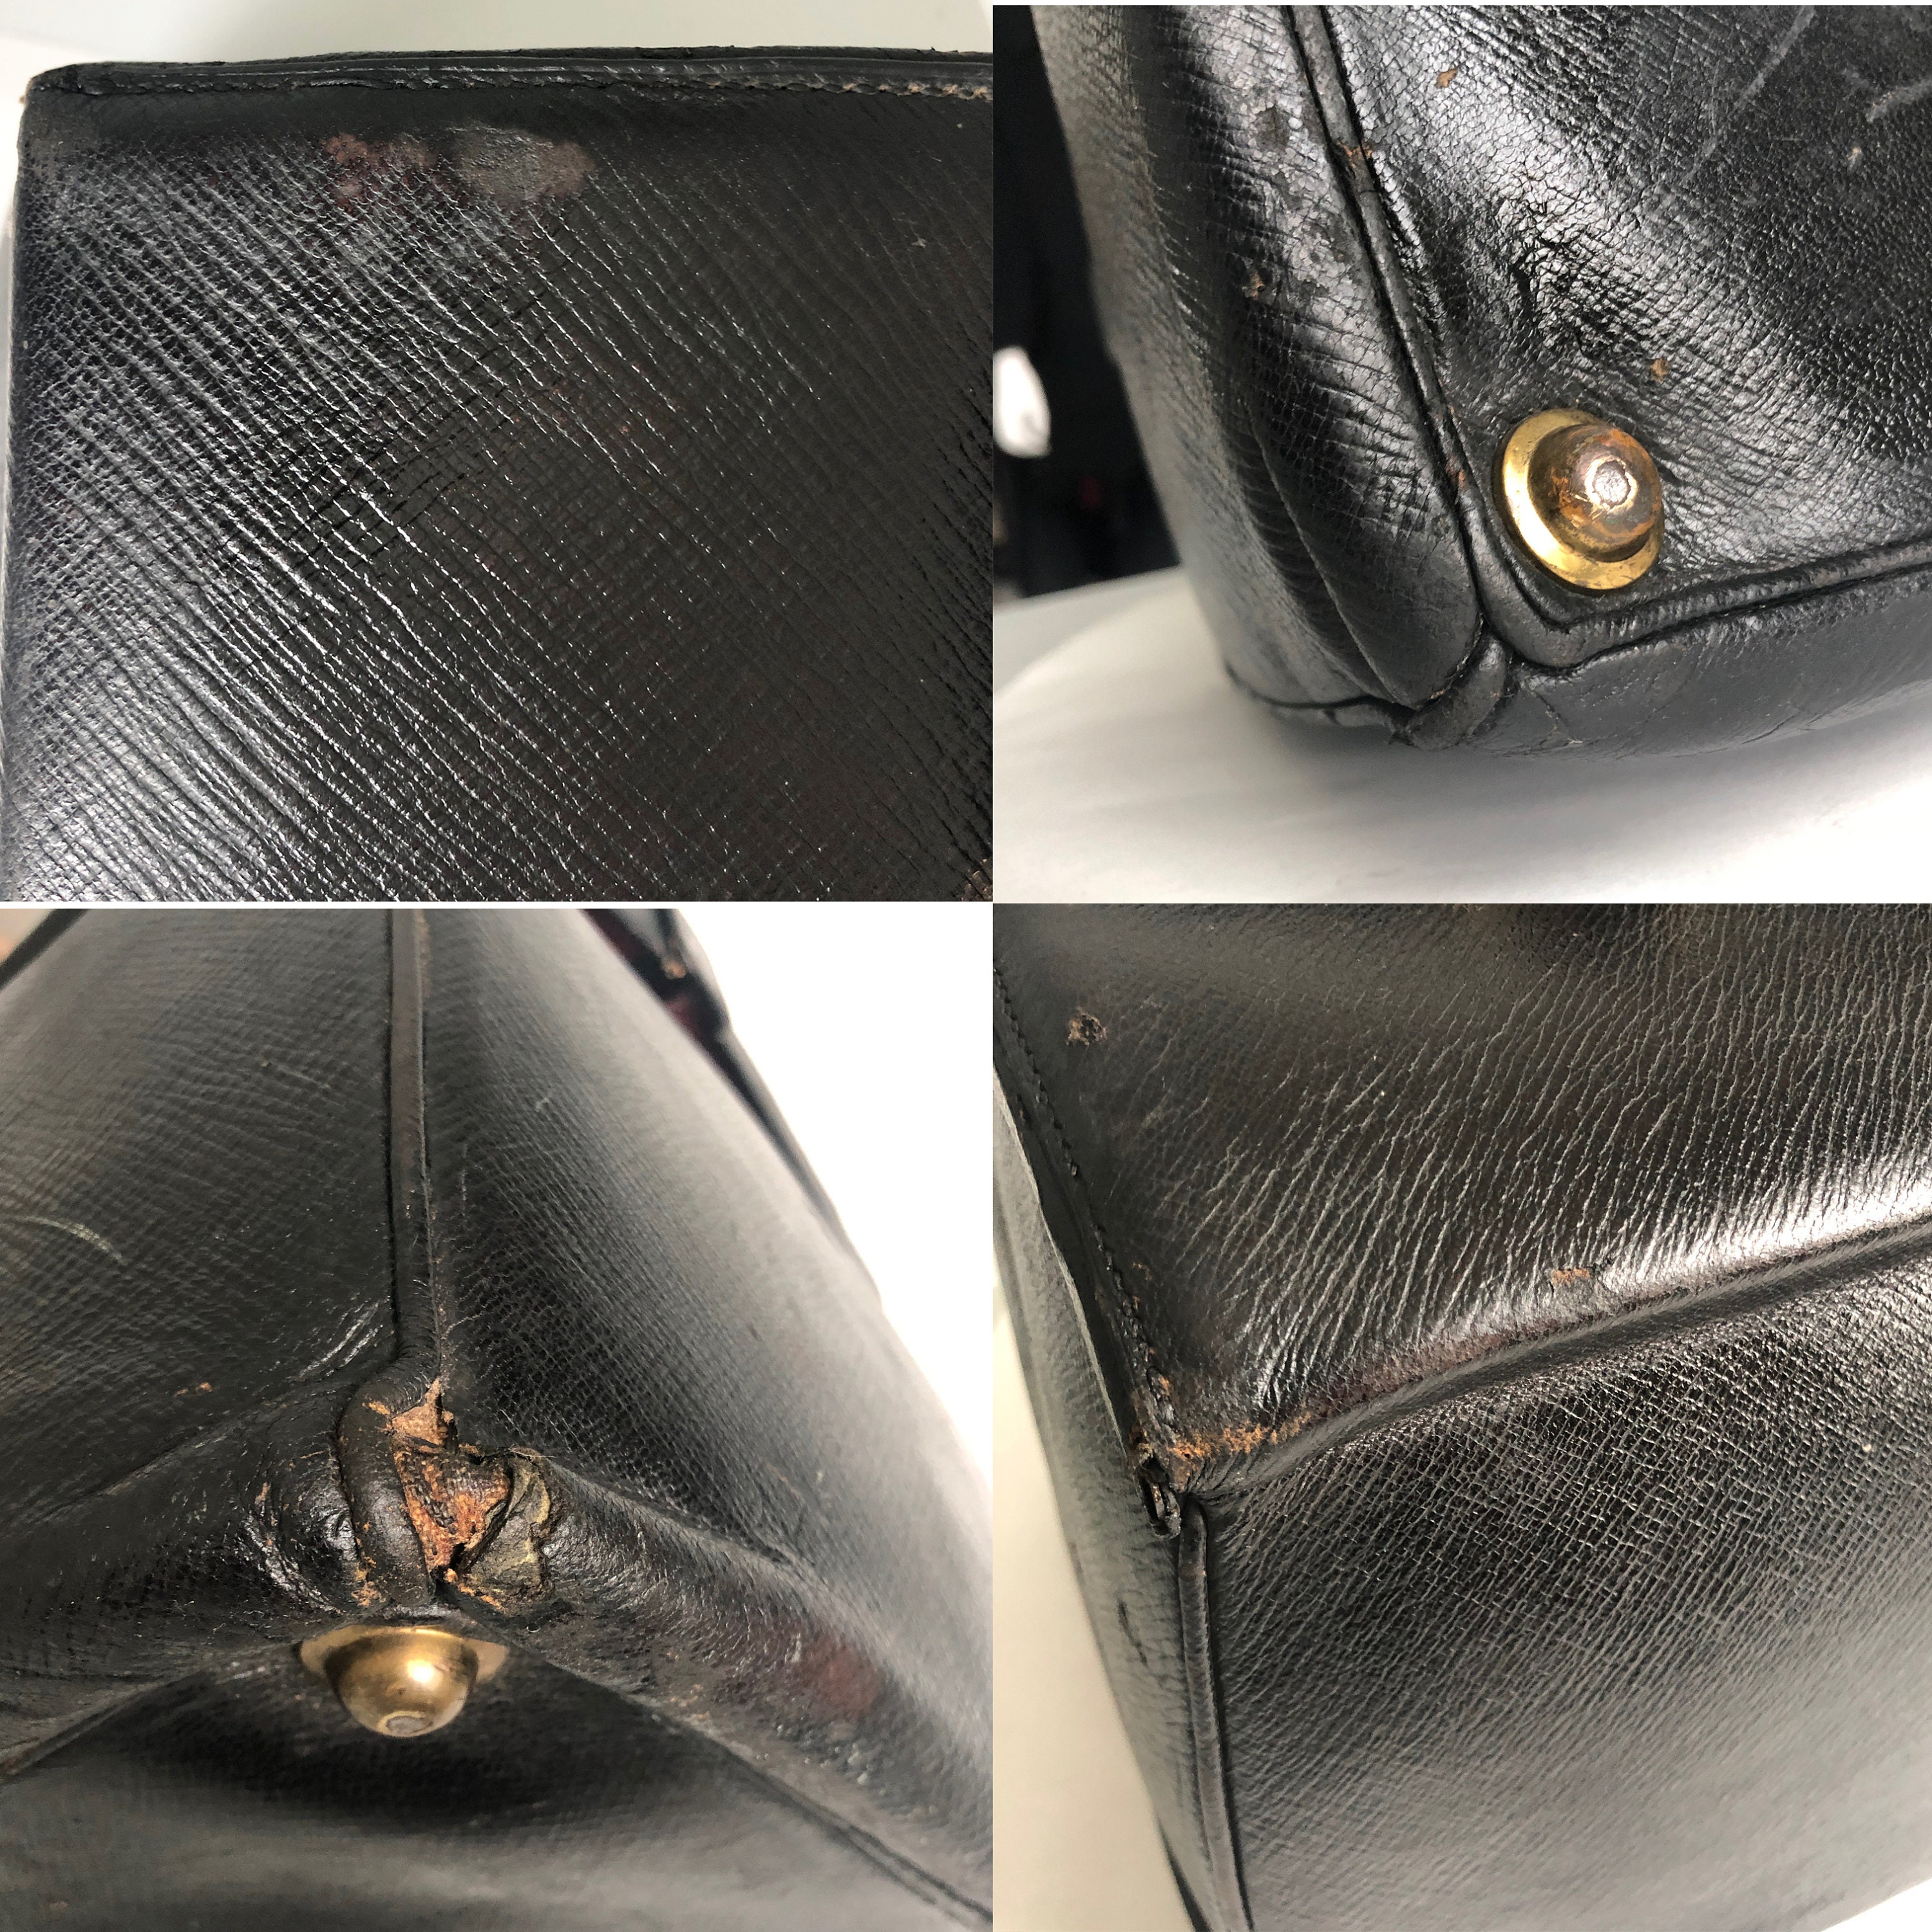 1900s Louis Vuitton leather doctors bag - Pinth Vintage Luggage